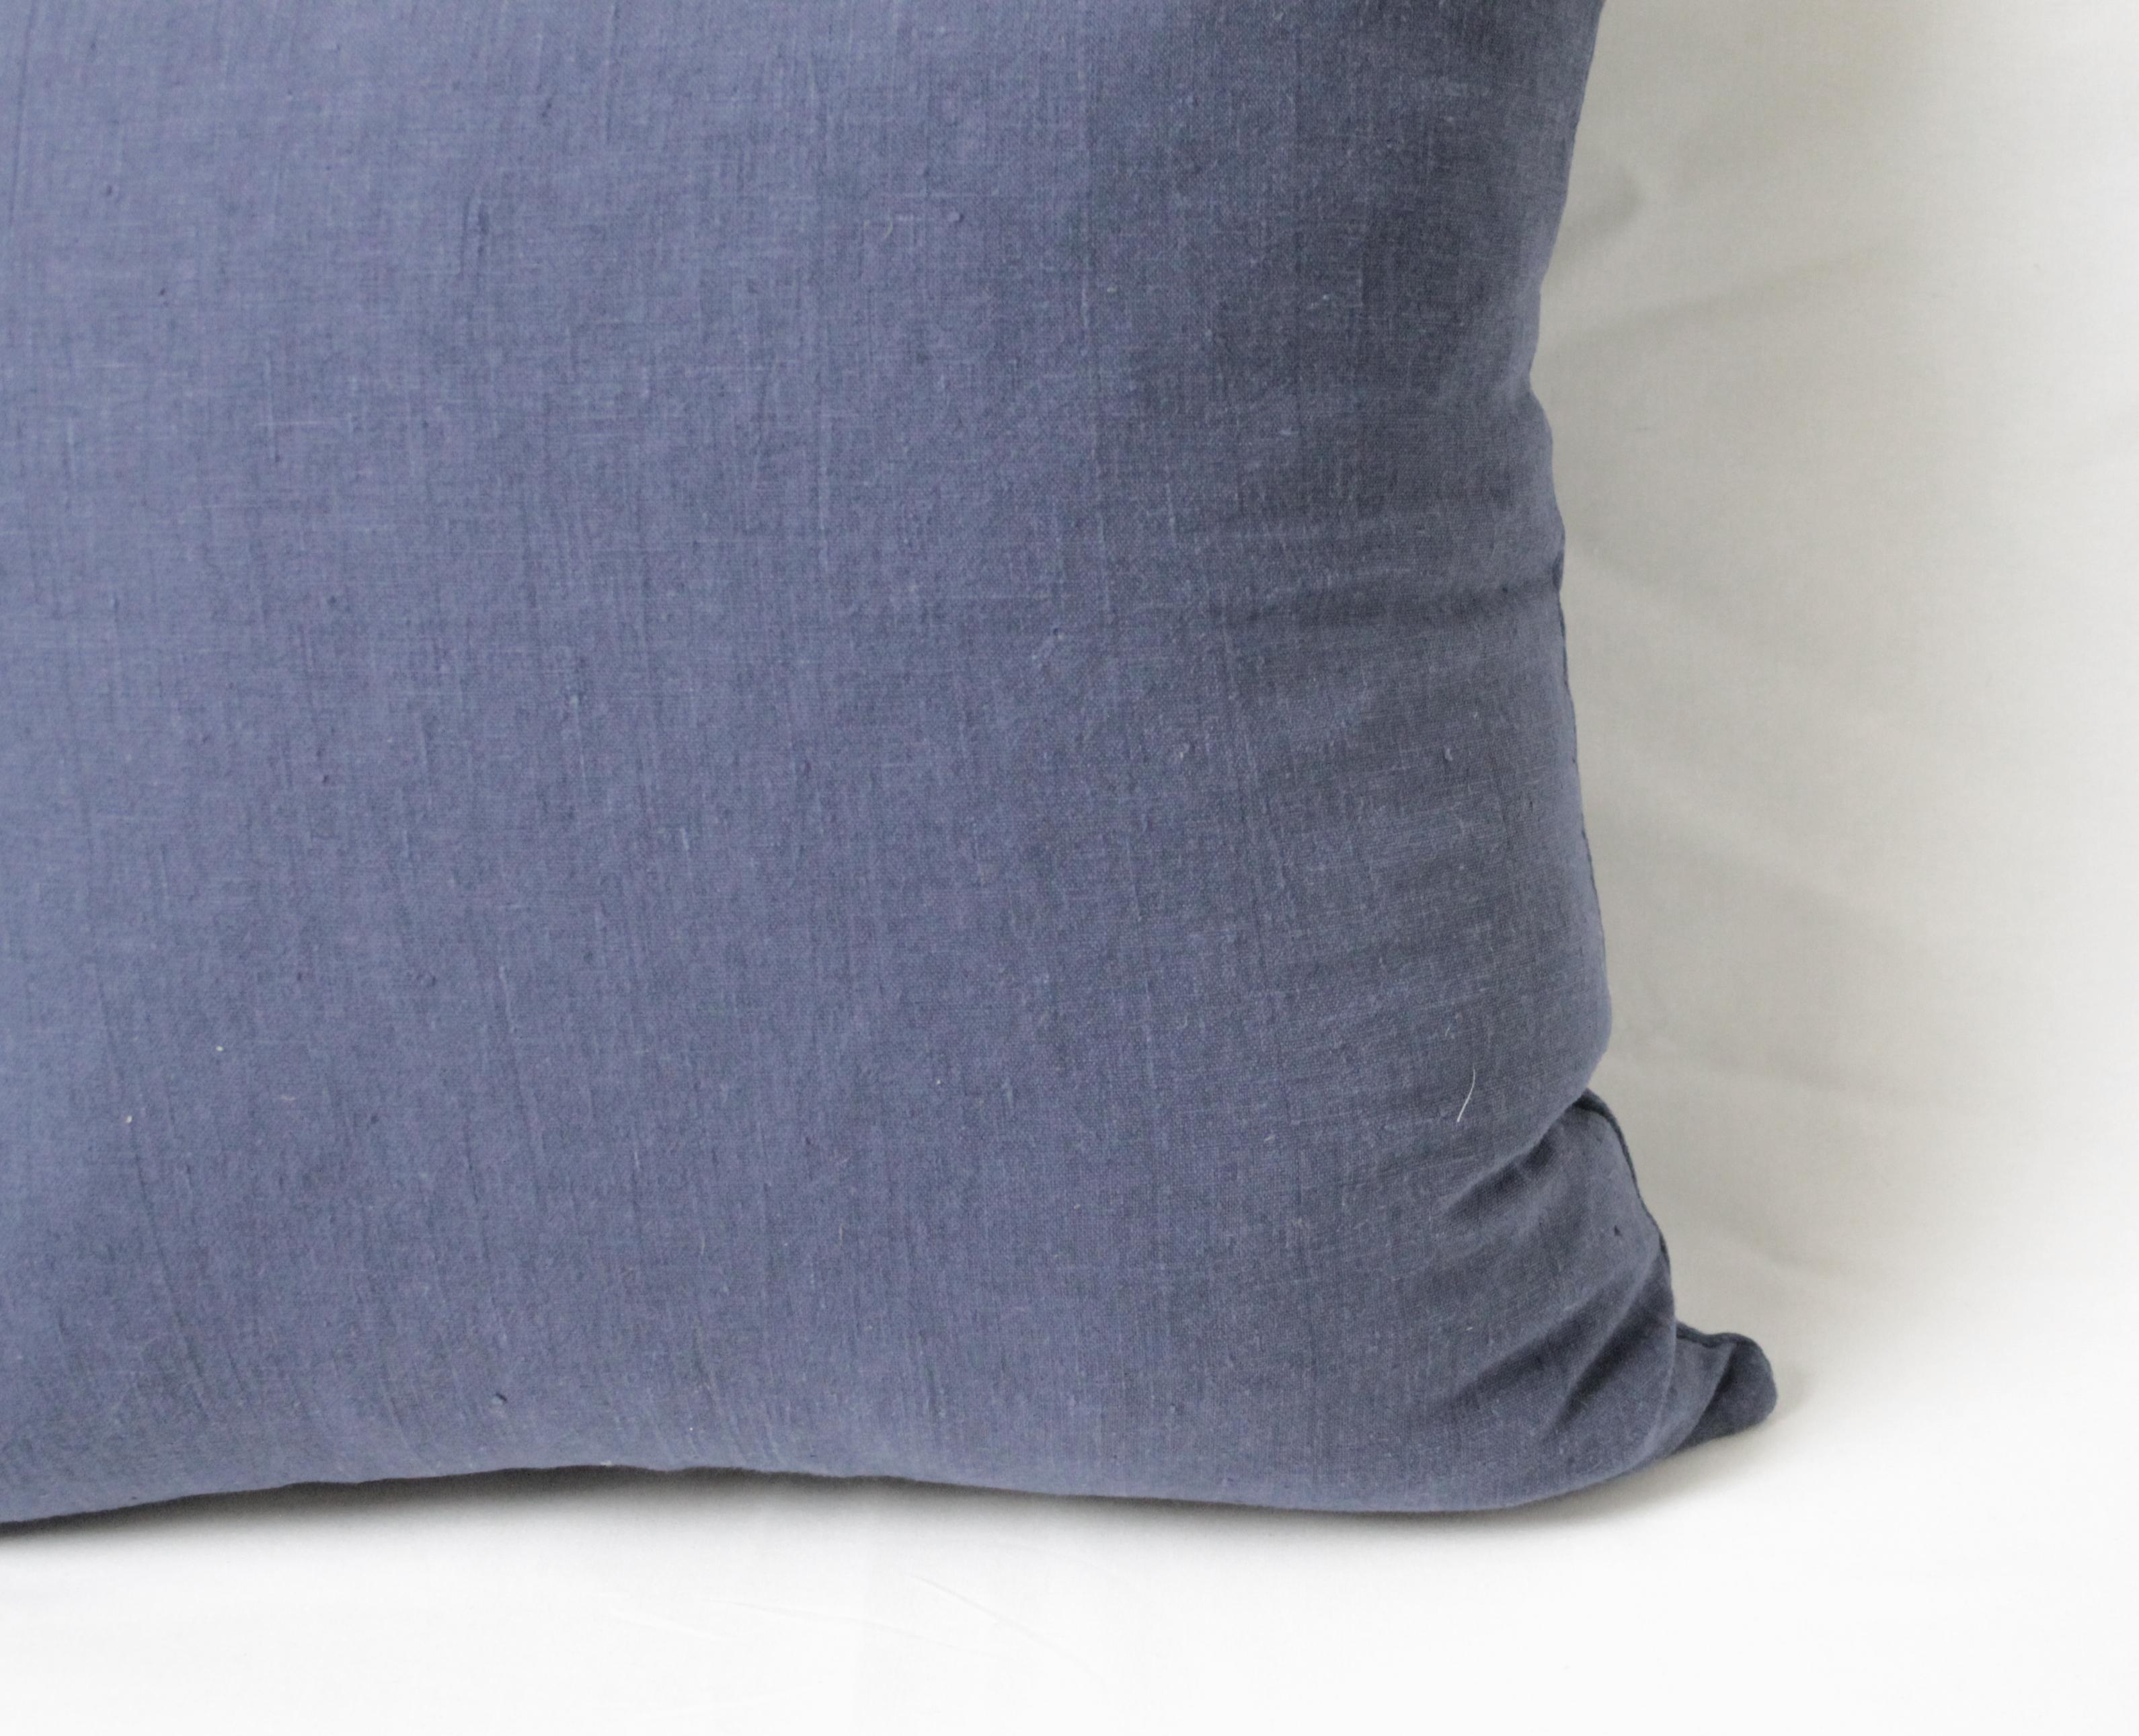 Antique Indigo Blue and White Batik Accent Pillow 7